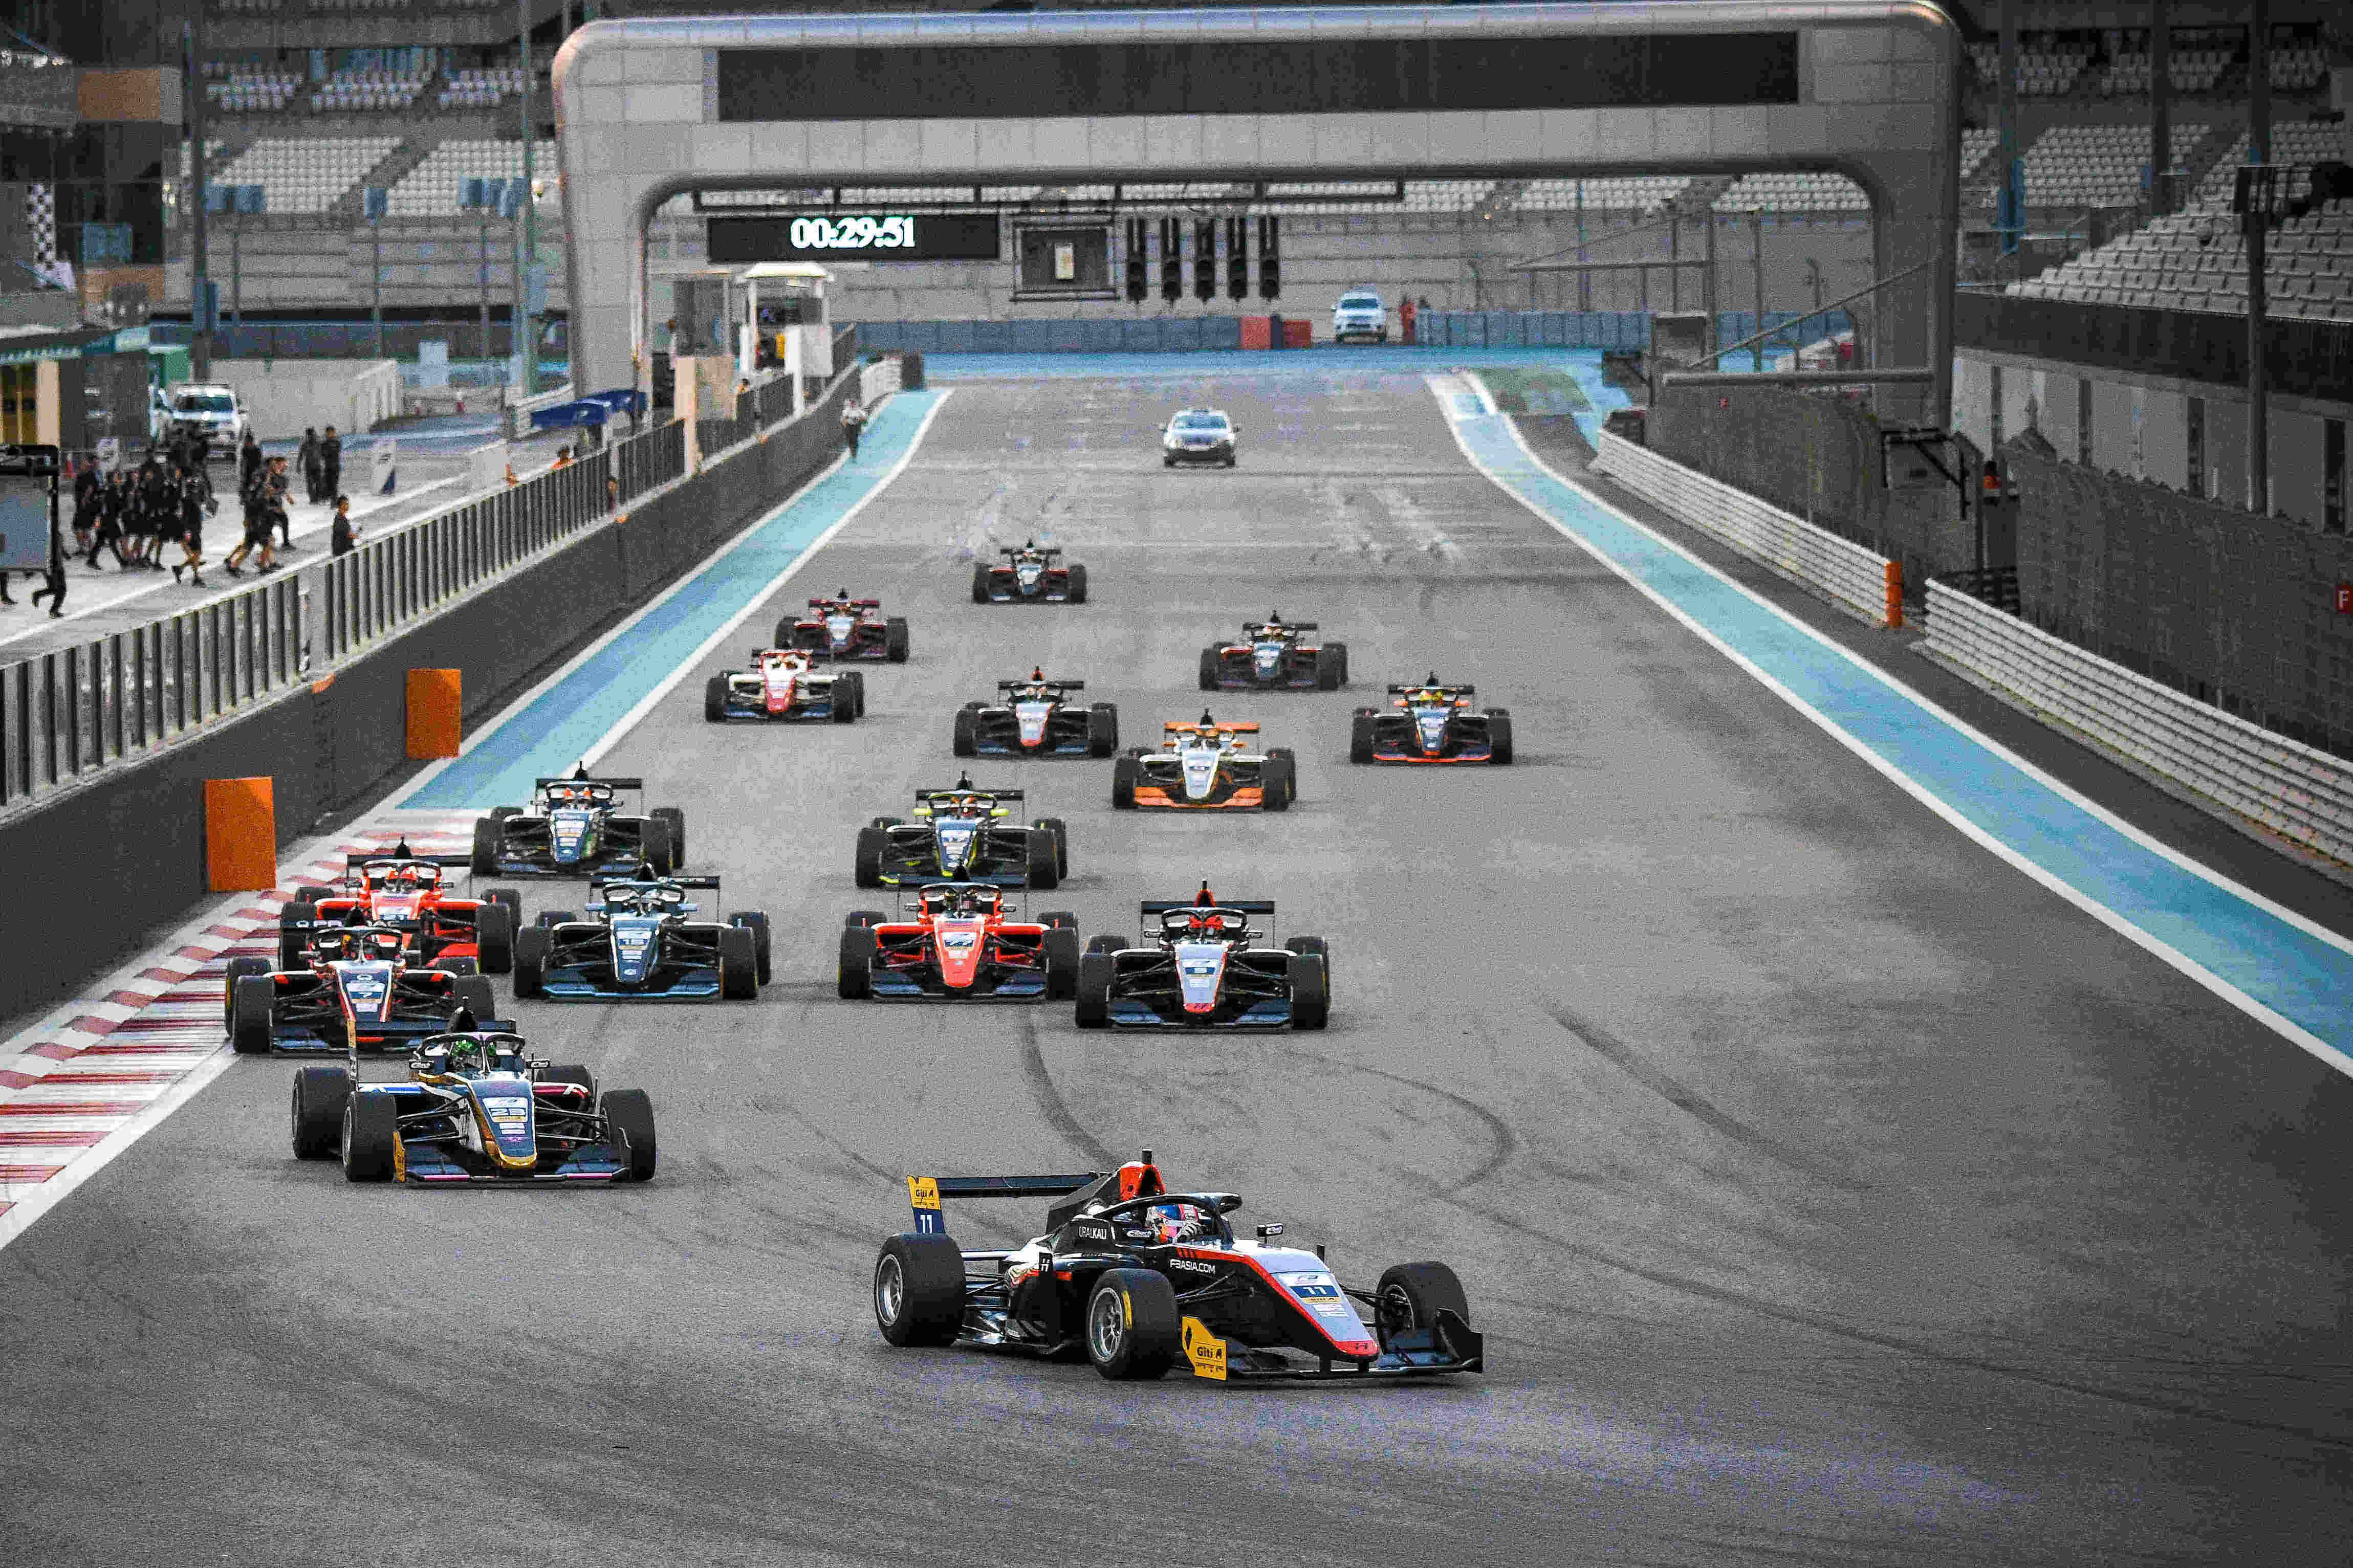 Giti Records Sensational Middle East Racing Debut In F3 Dubai And Abu Dhabi Action